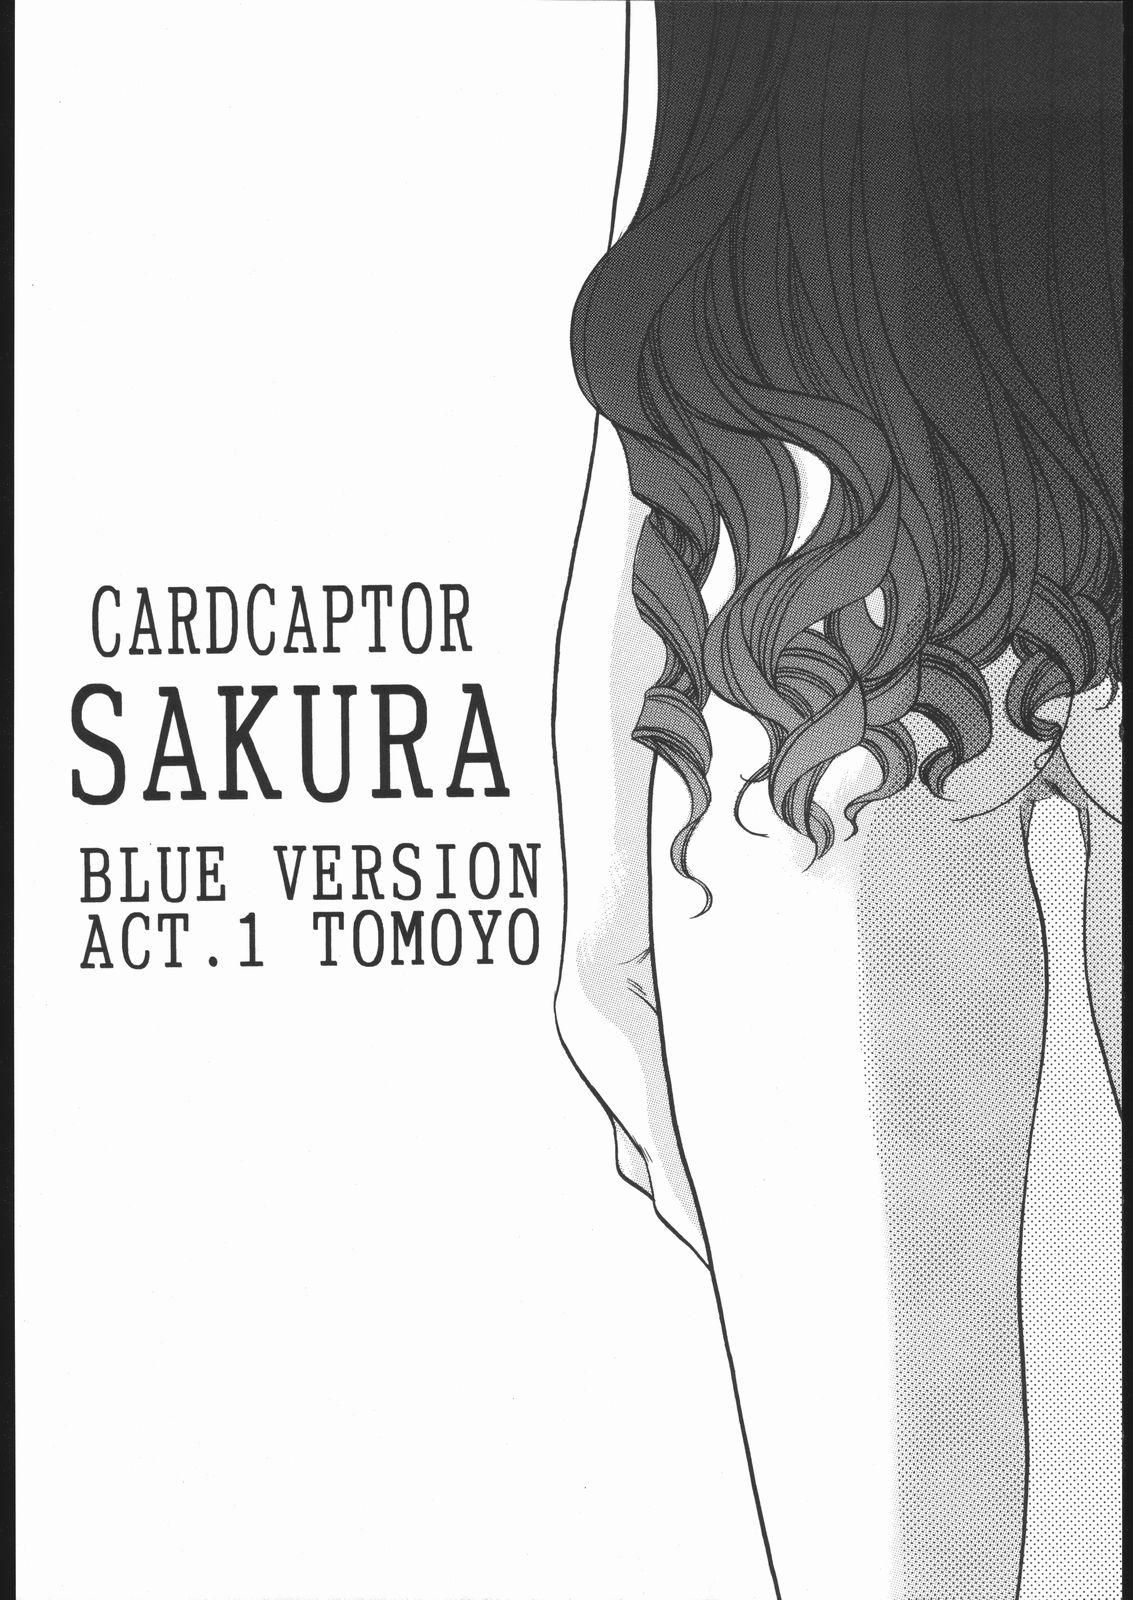 Sentando Card Captor Sakura Blue Version - Cardcaptor sakura Slut - Page 5